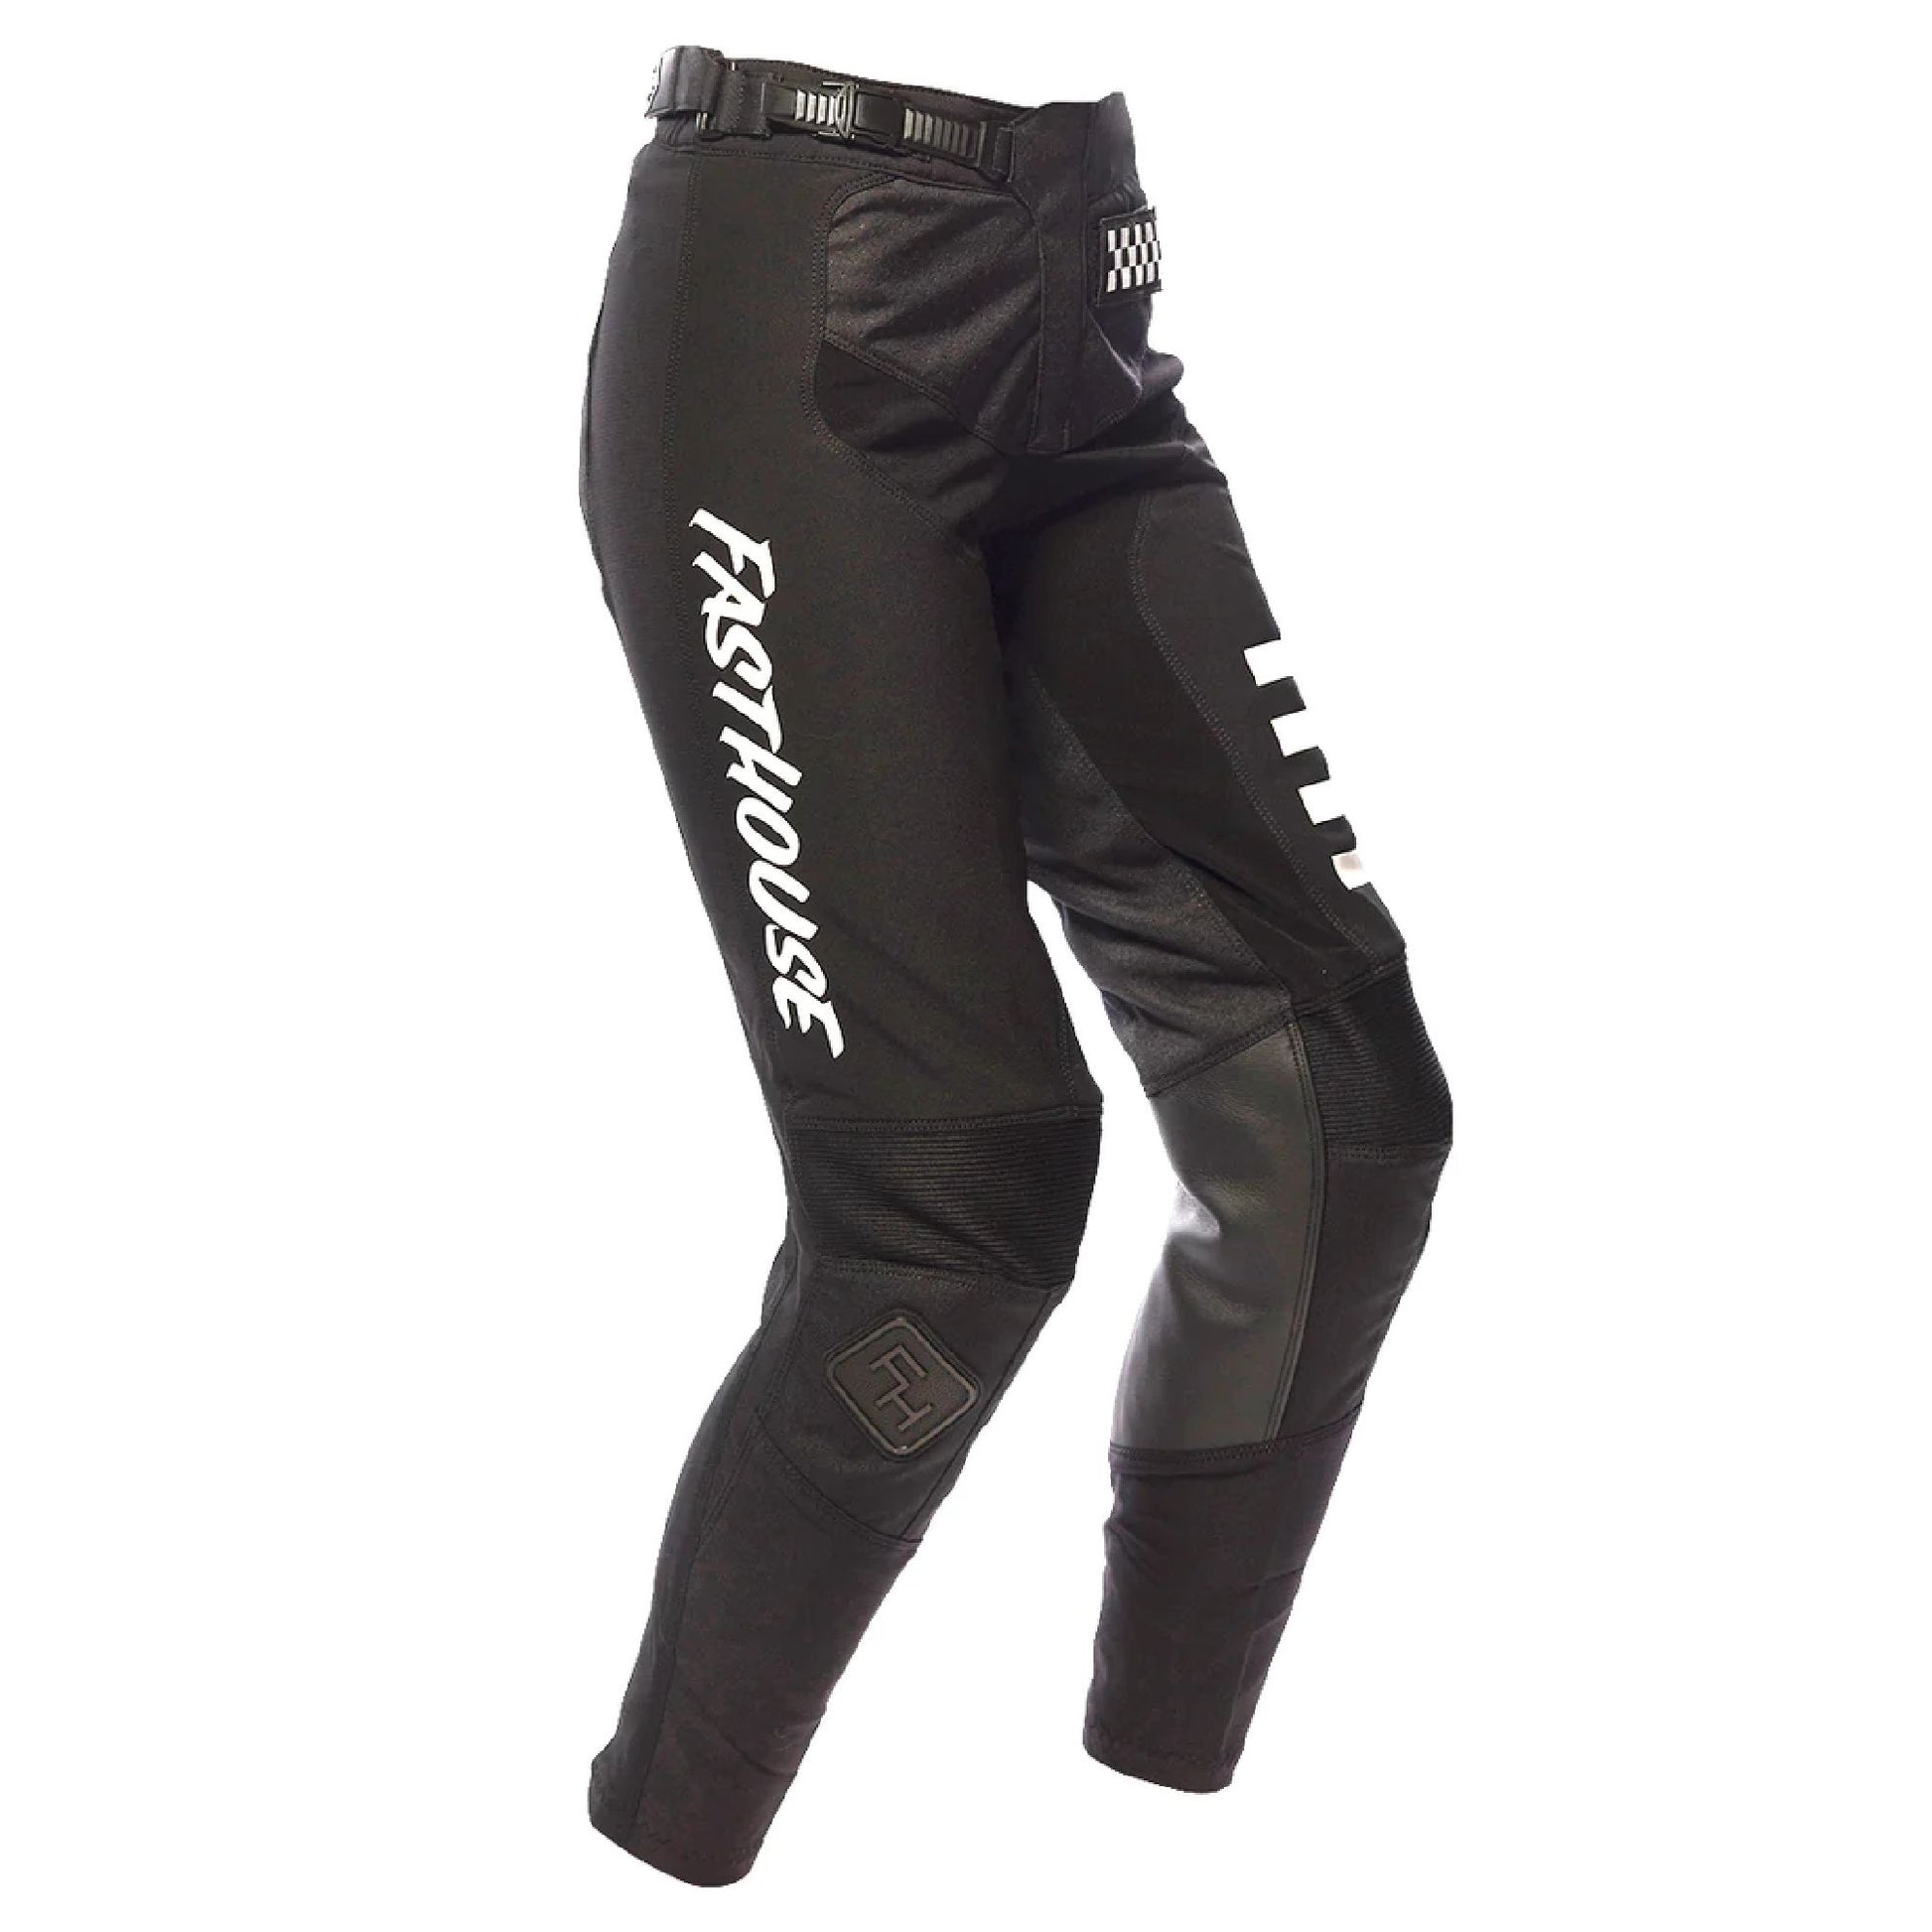 Fasthouse Women's Speed Style Pant Black Bike Pants